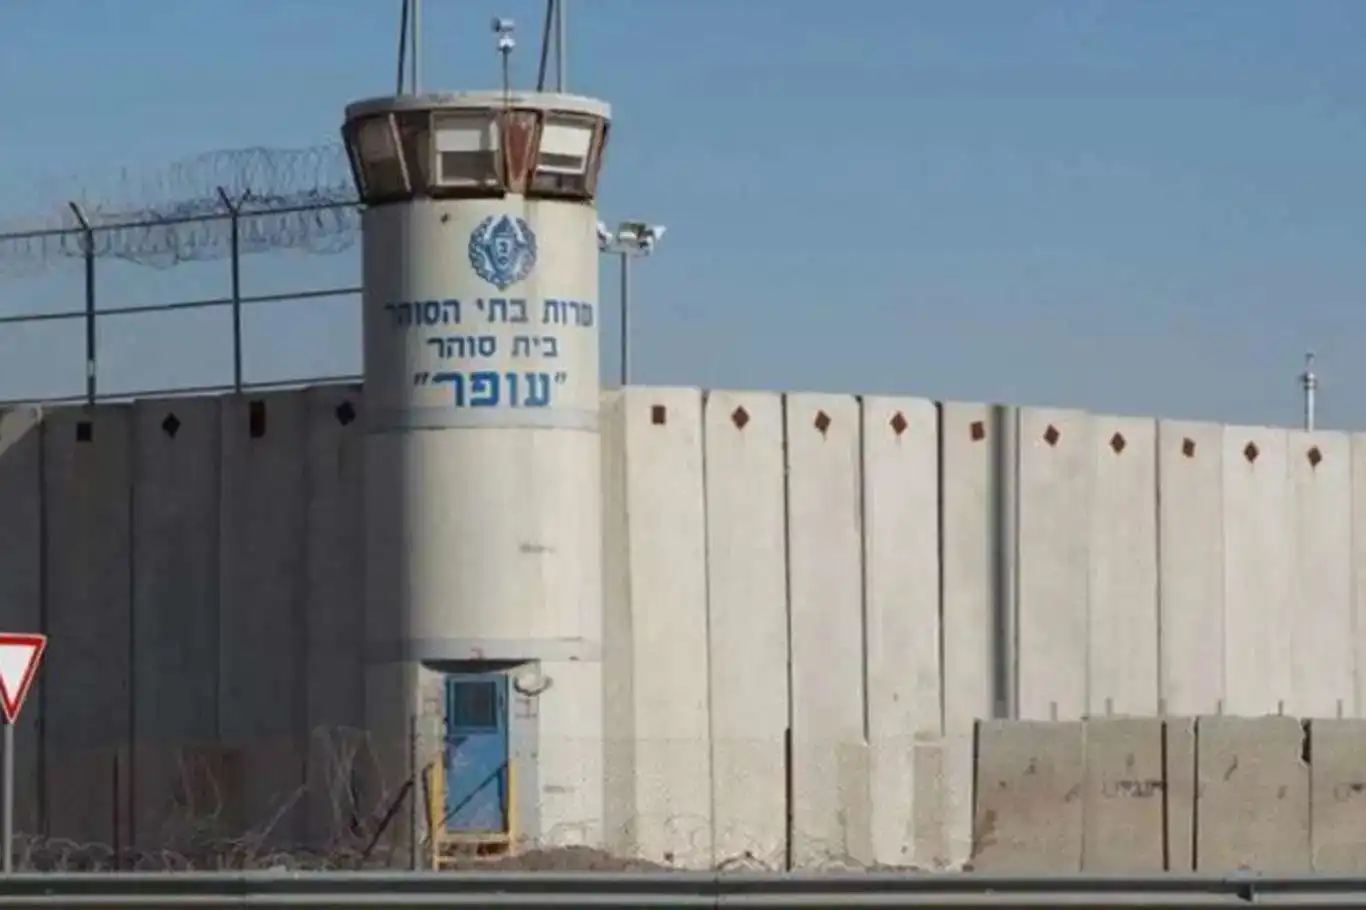 36 Gaza prisoners die from torture in Israeli detention